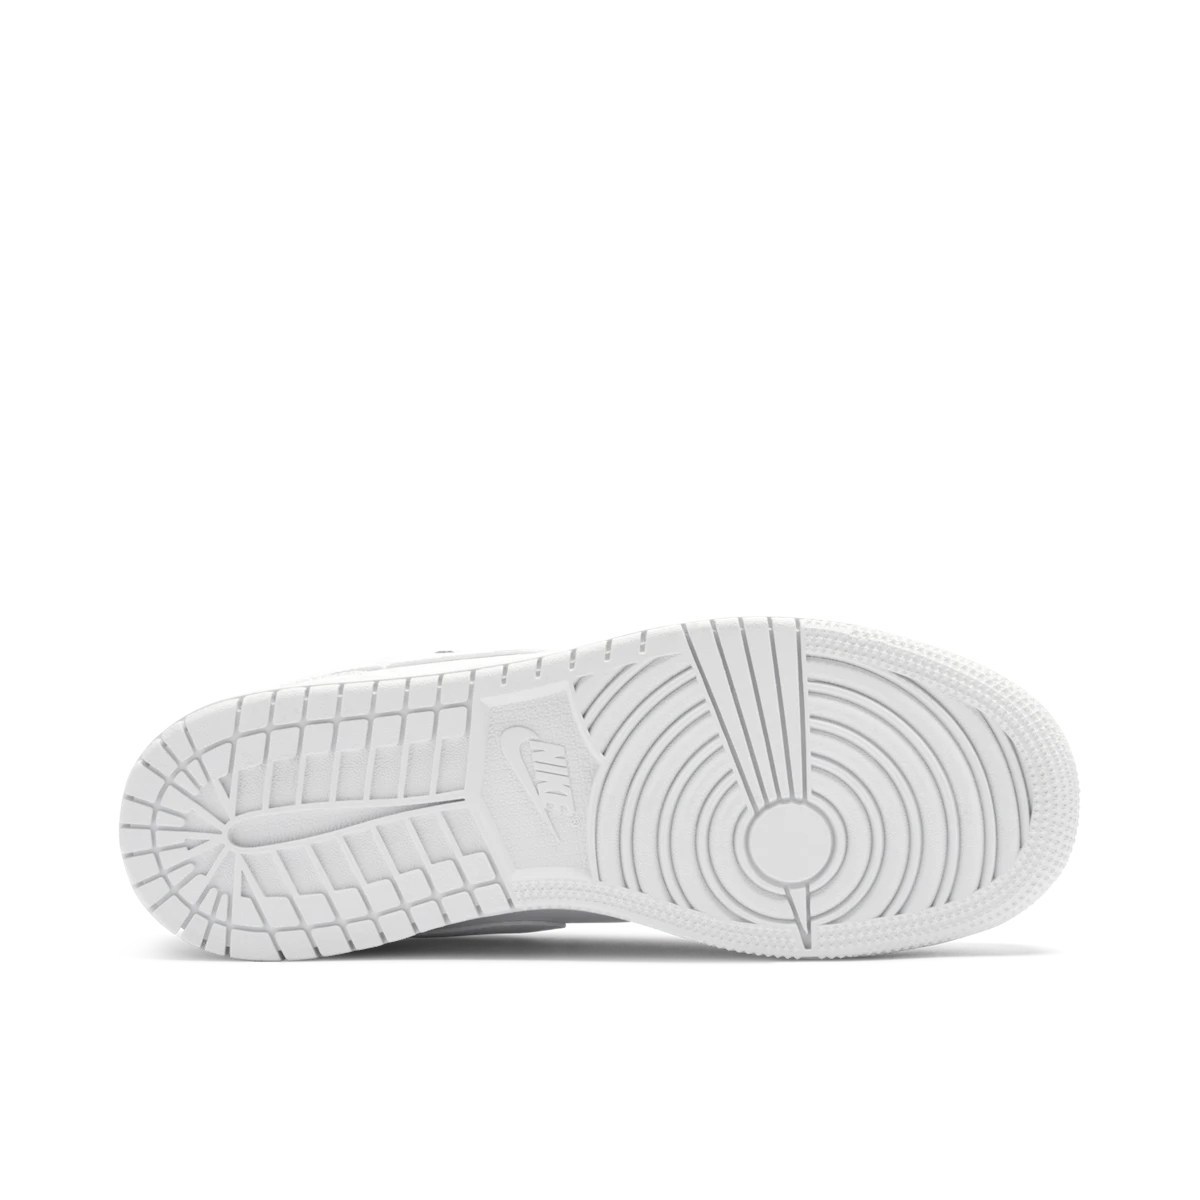 Nike Air Jordan 1 Low White (GS)